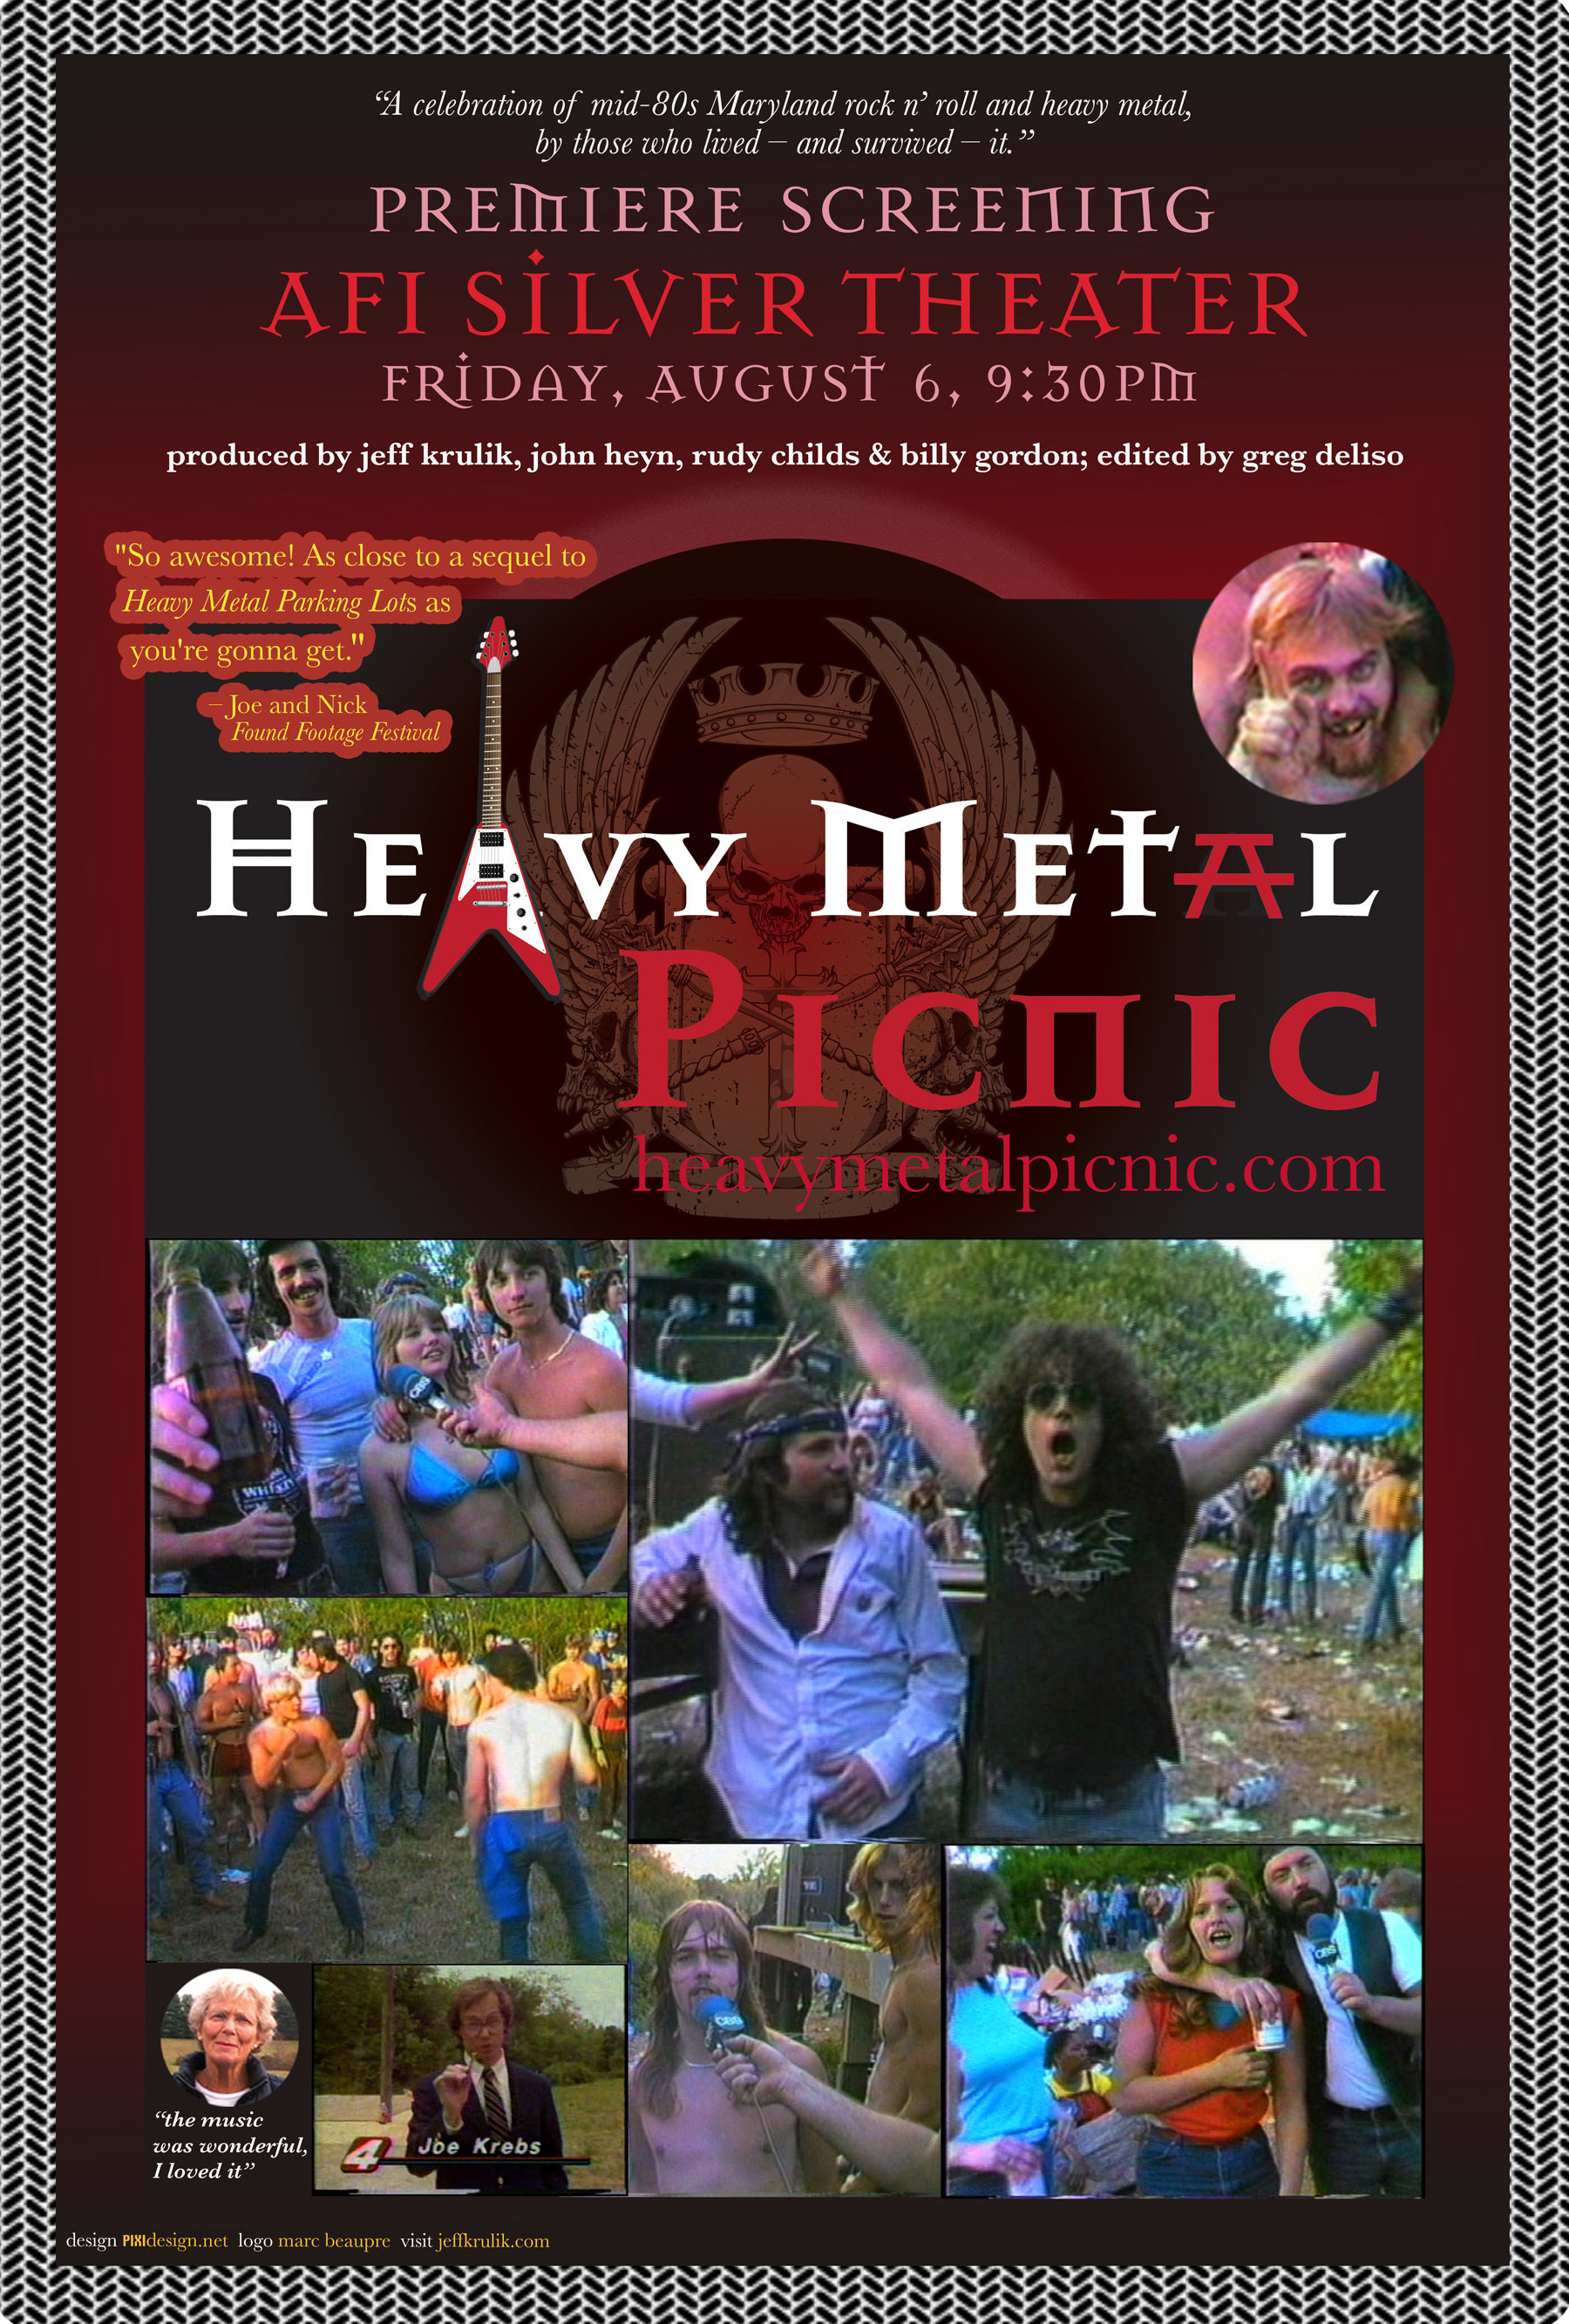 Heavy Metal Picnic (2010) Screenshot 1